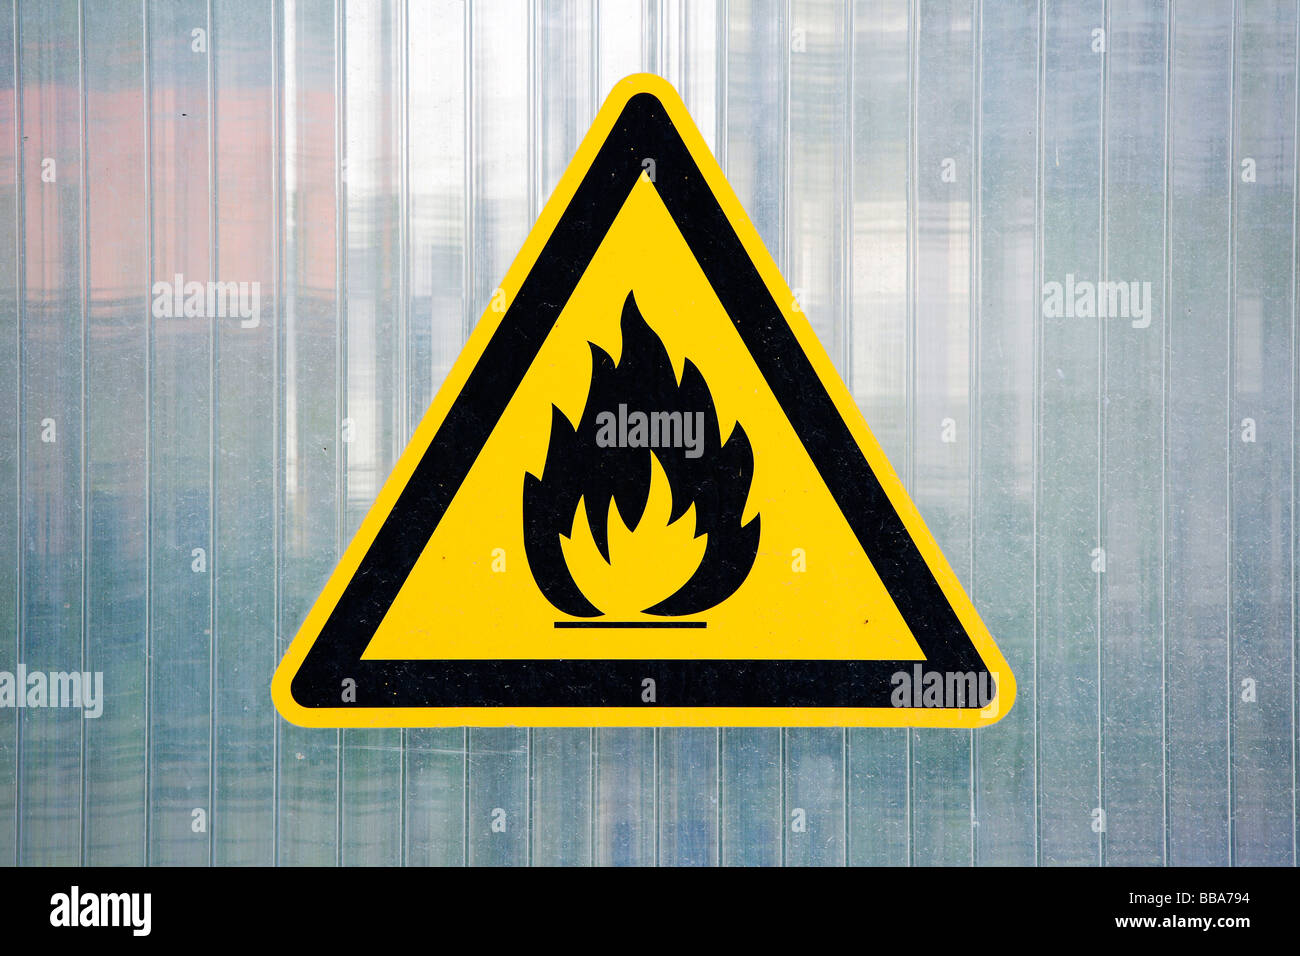 Fire hazard, warning sign Stock Photo